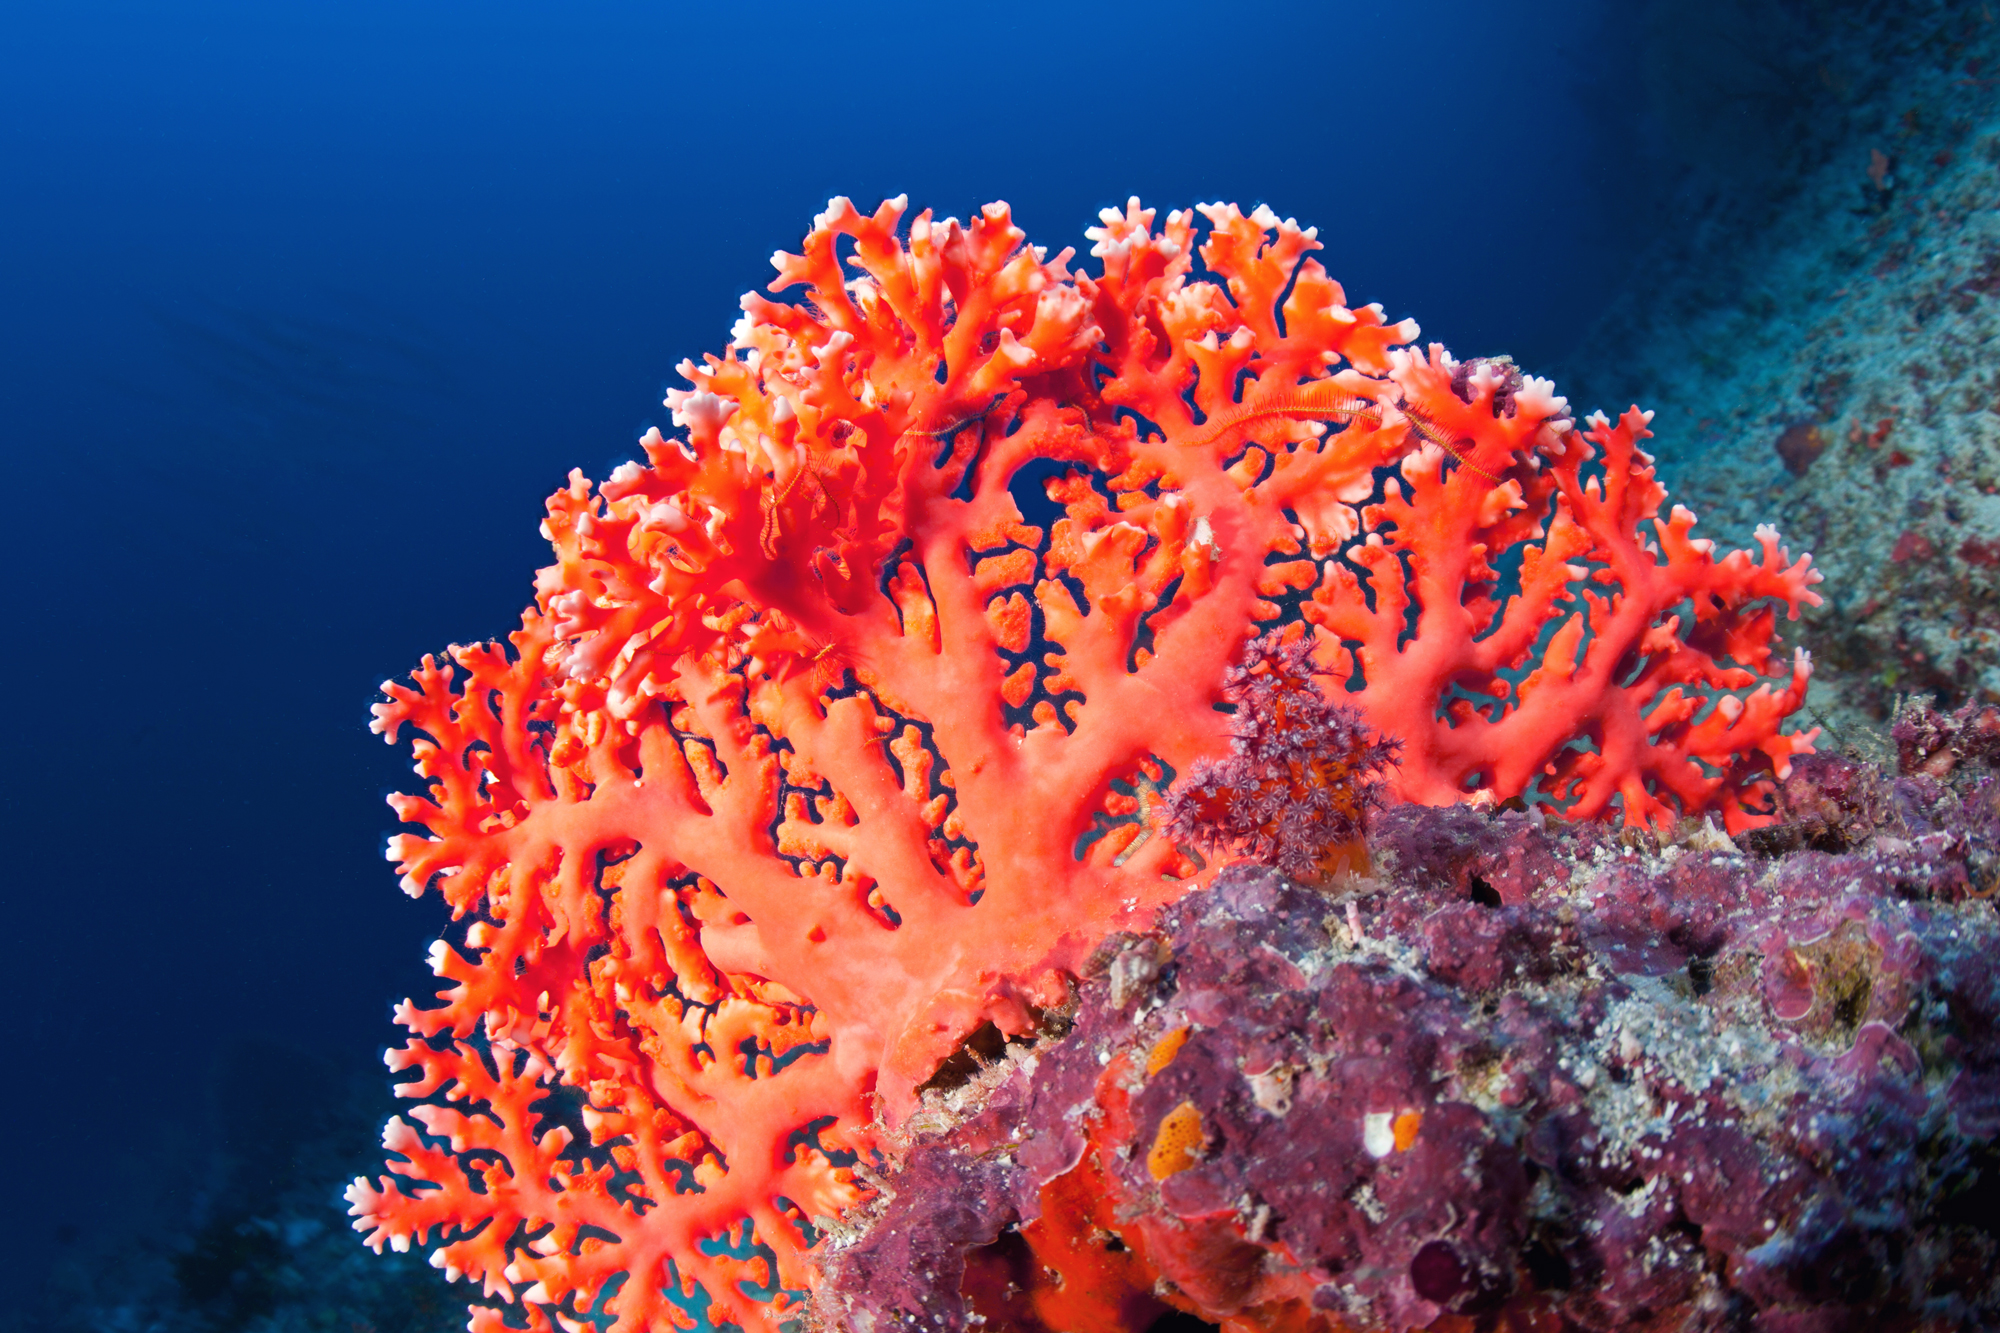 Коралловые рифы описание. Коралловые полипы рифы. Коралловые полипы в индийском океане. Notocyathus коралл. Коралл Montastraea.